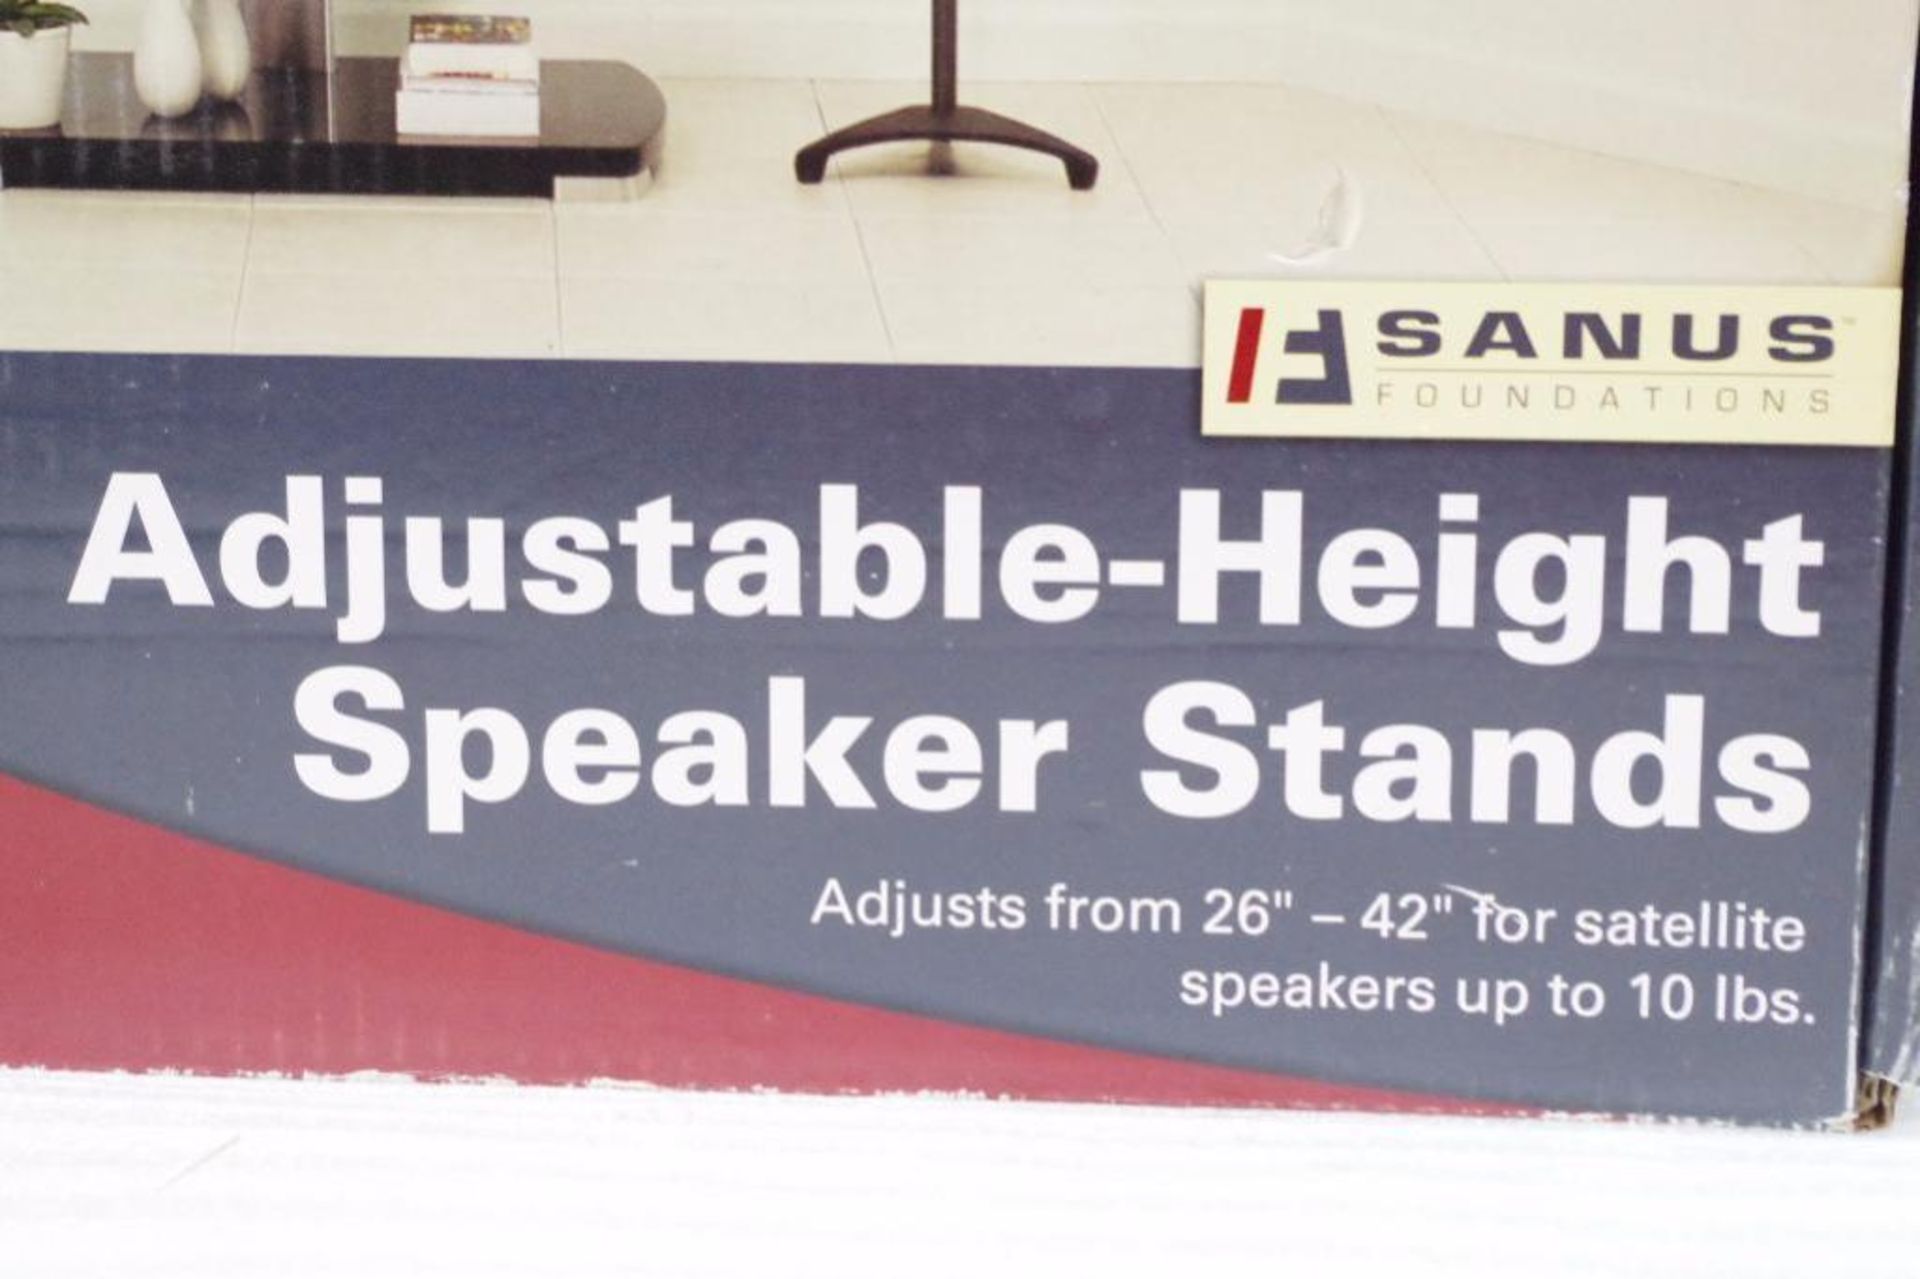 [2] SANUS FOUNDATION Adjustable-Height Speaker Stands M/N EFSAT-B1 (1 Box w/ 2 Stands) - Image 3 of 4